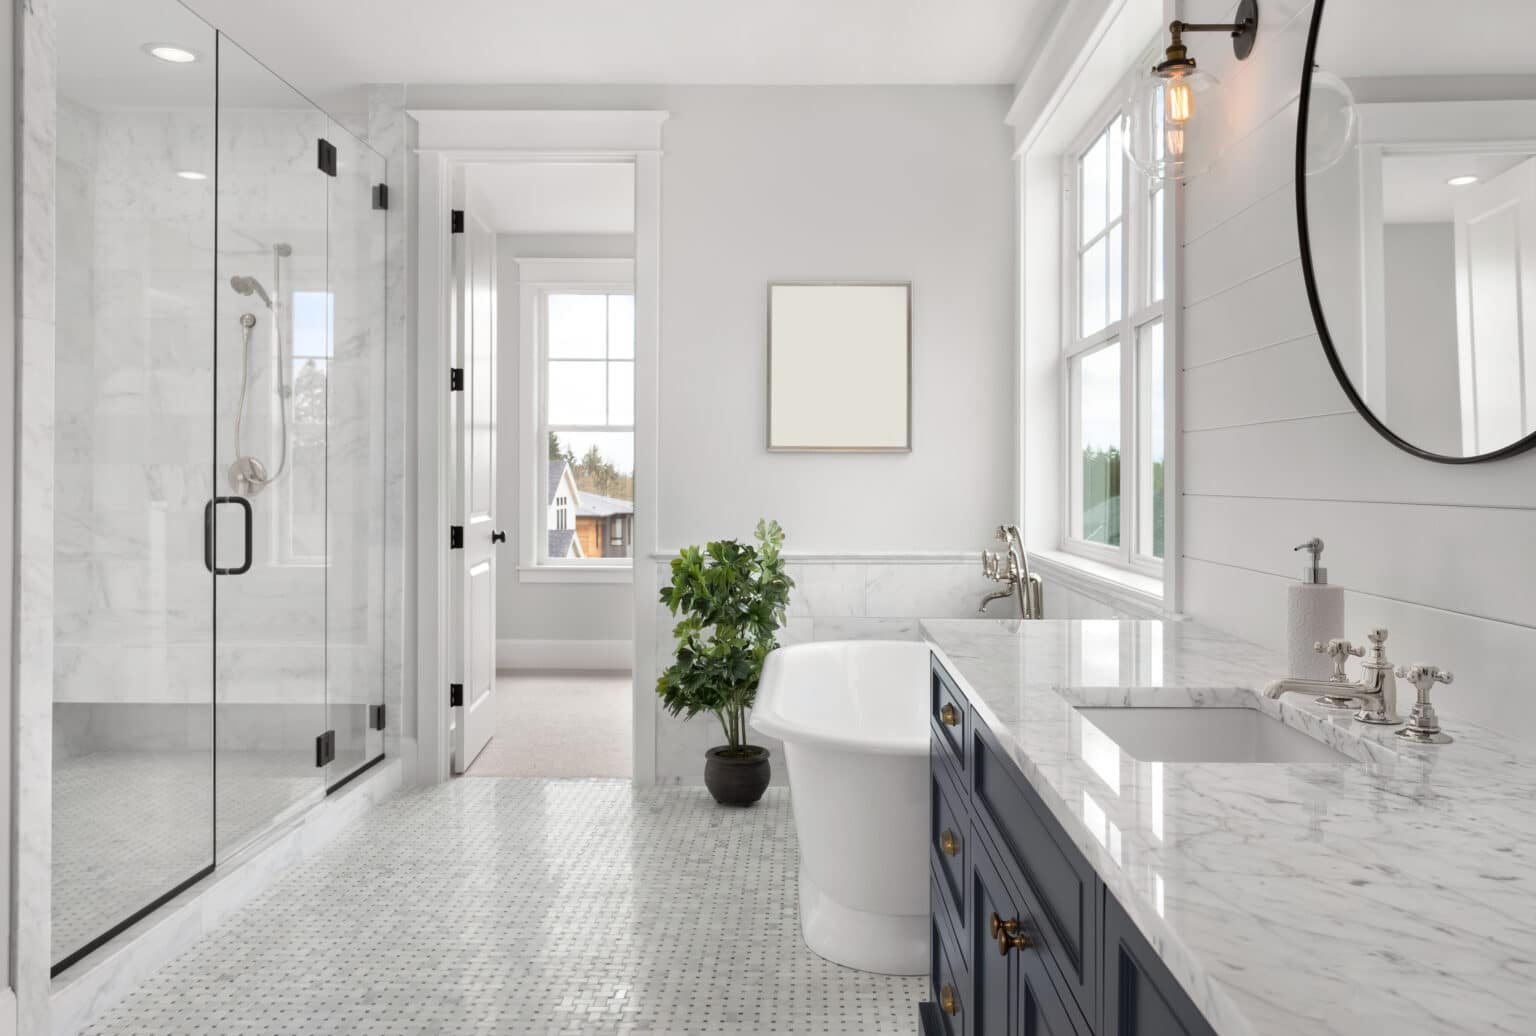 Beautiful Ensuite Master Bathroom in New Luxury Home. Features Elegant Countertop, Bathtub, Shower, and Walk-in Closet